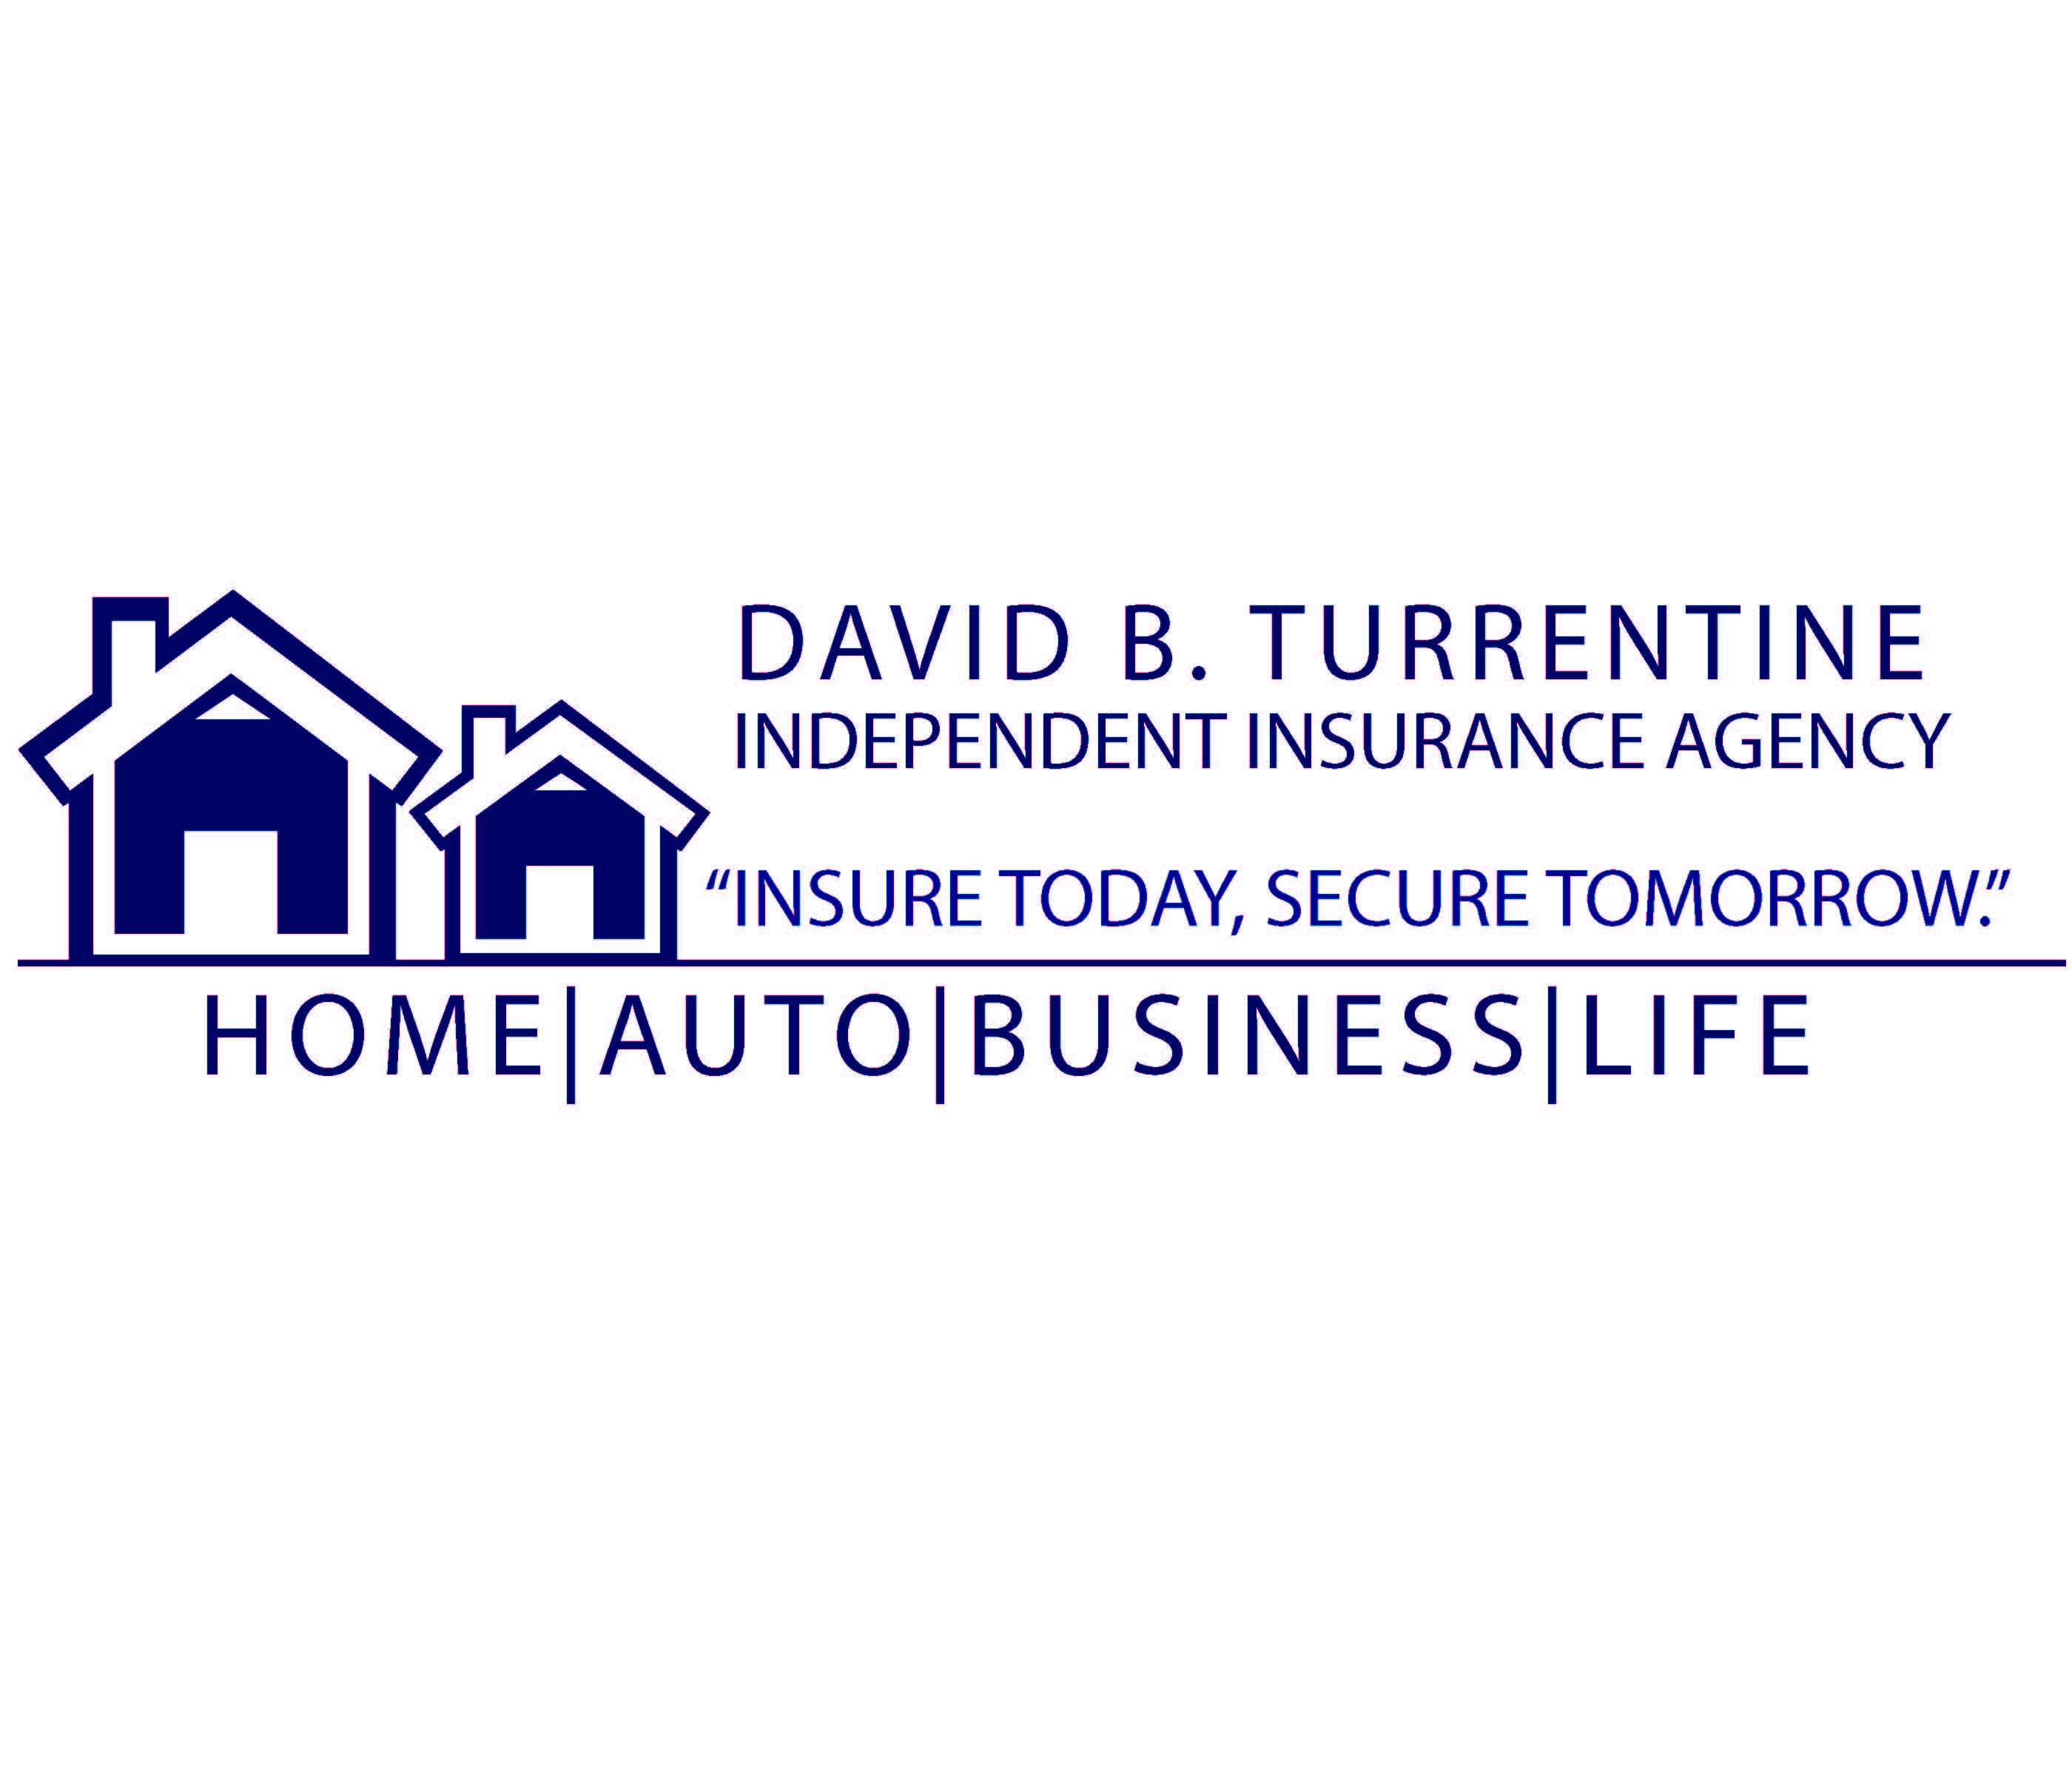 Turrentine Insurance Agency's logo